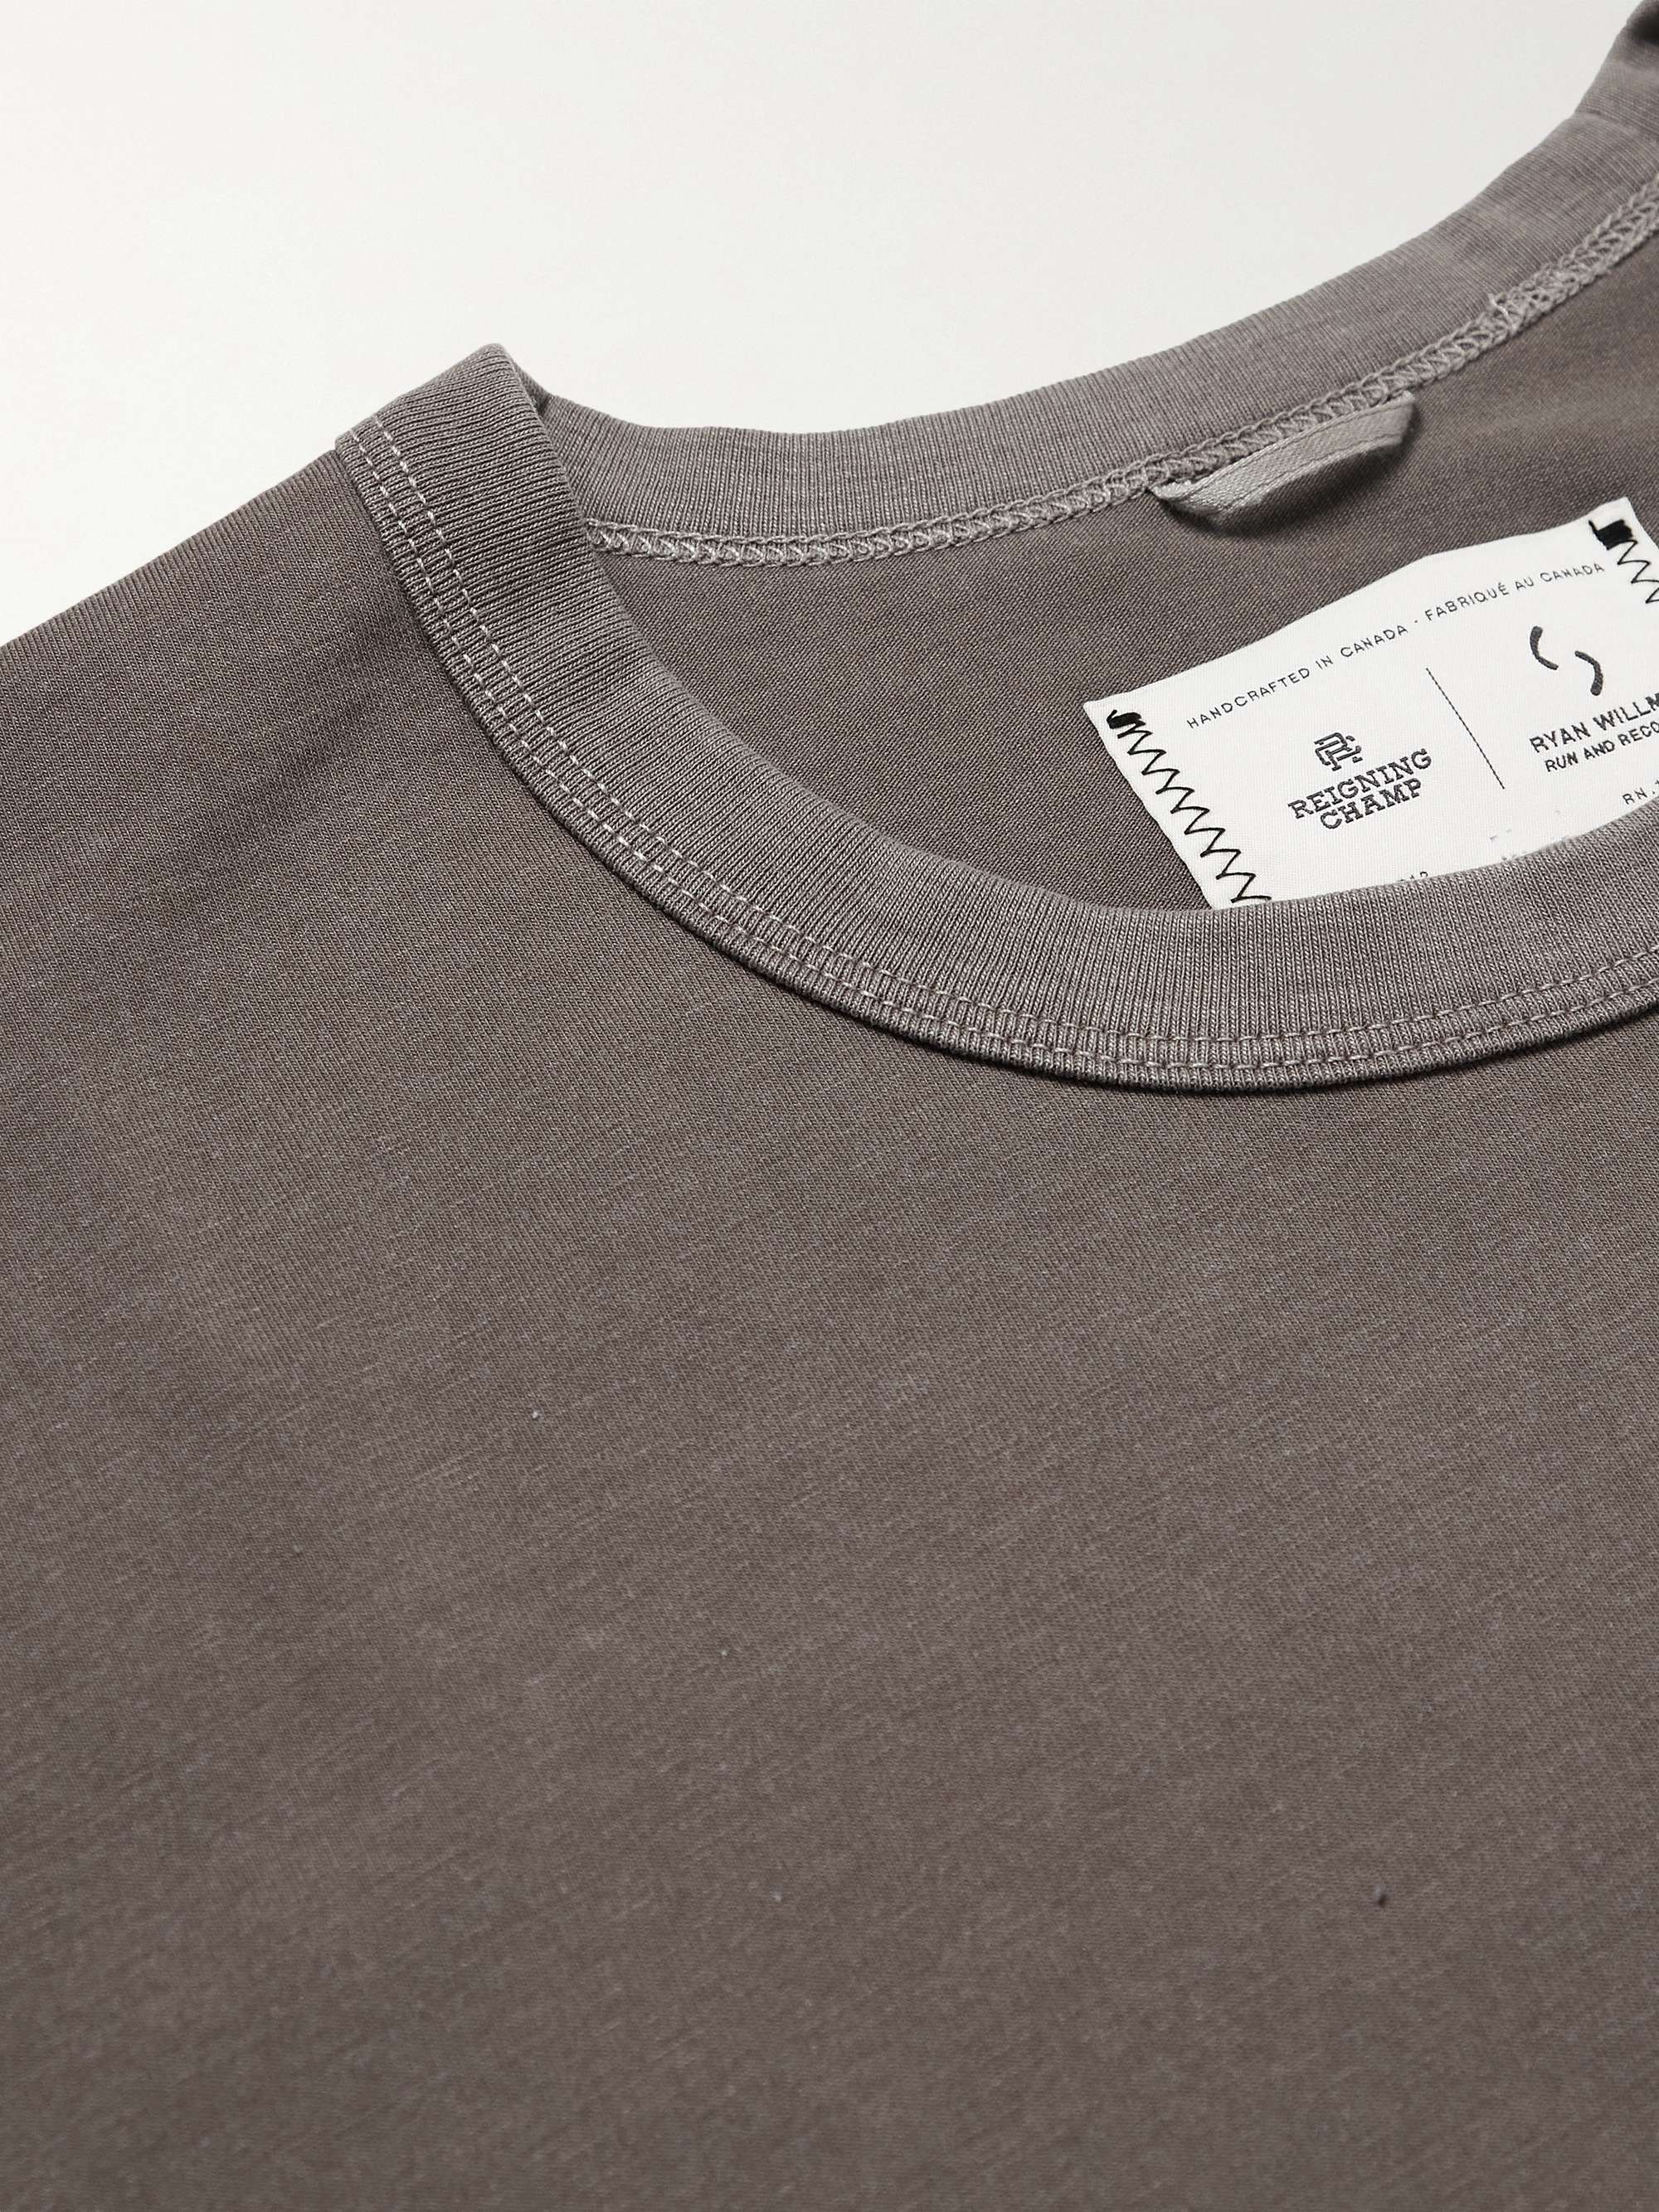 REIGNING CHAMP + Ryan Willms Garment-Dyed Printed Cotton-Blend Jersey  T-Shirt | MR PORTER